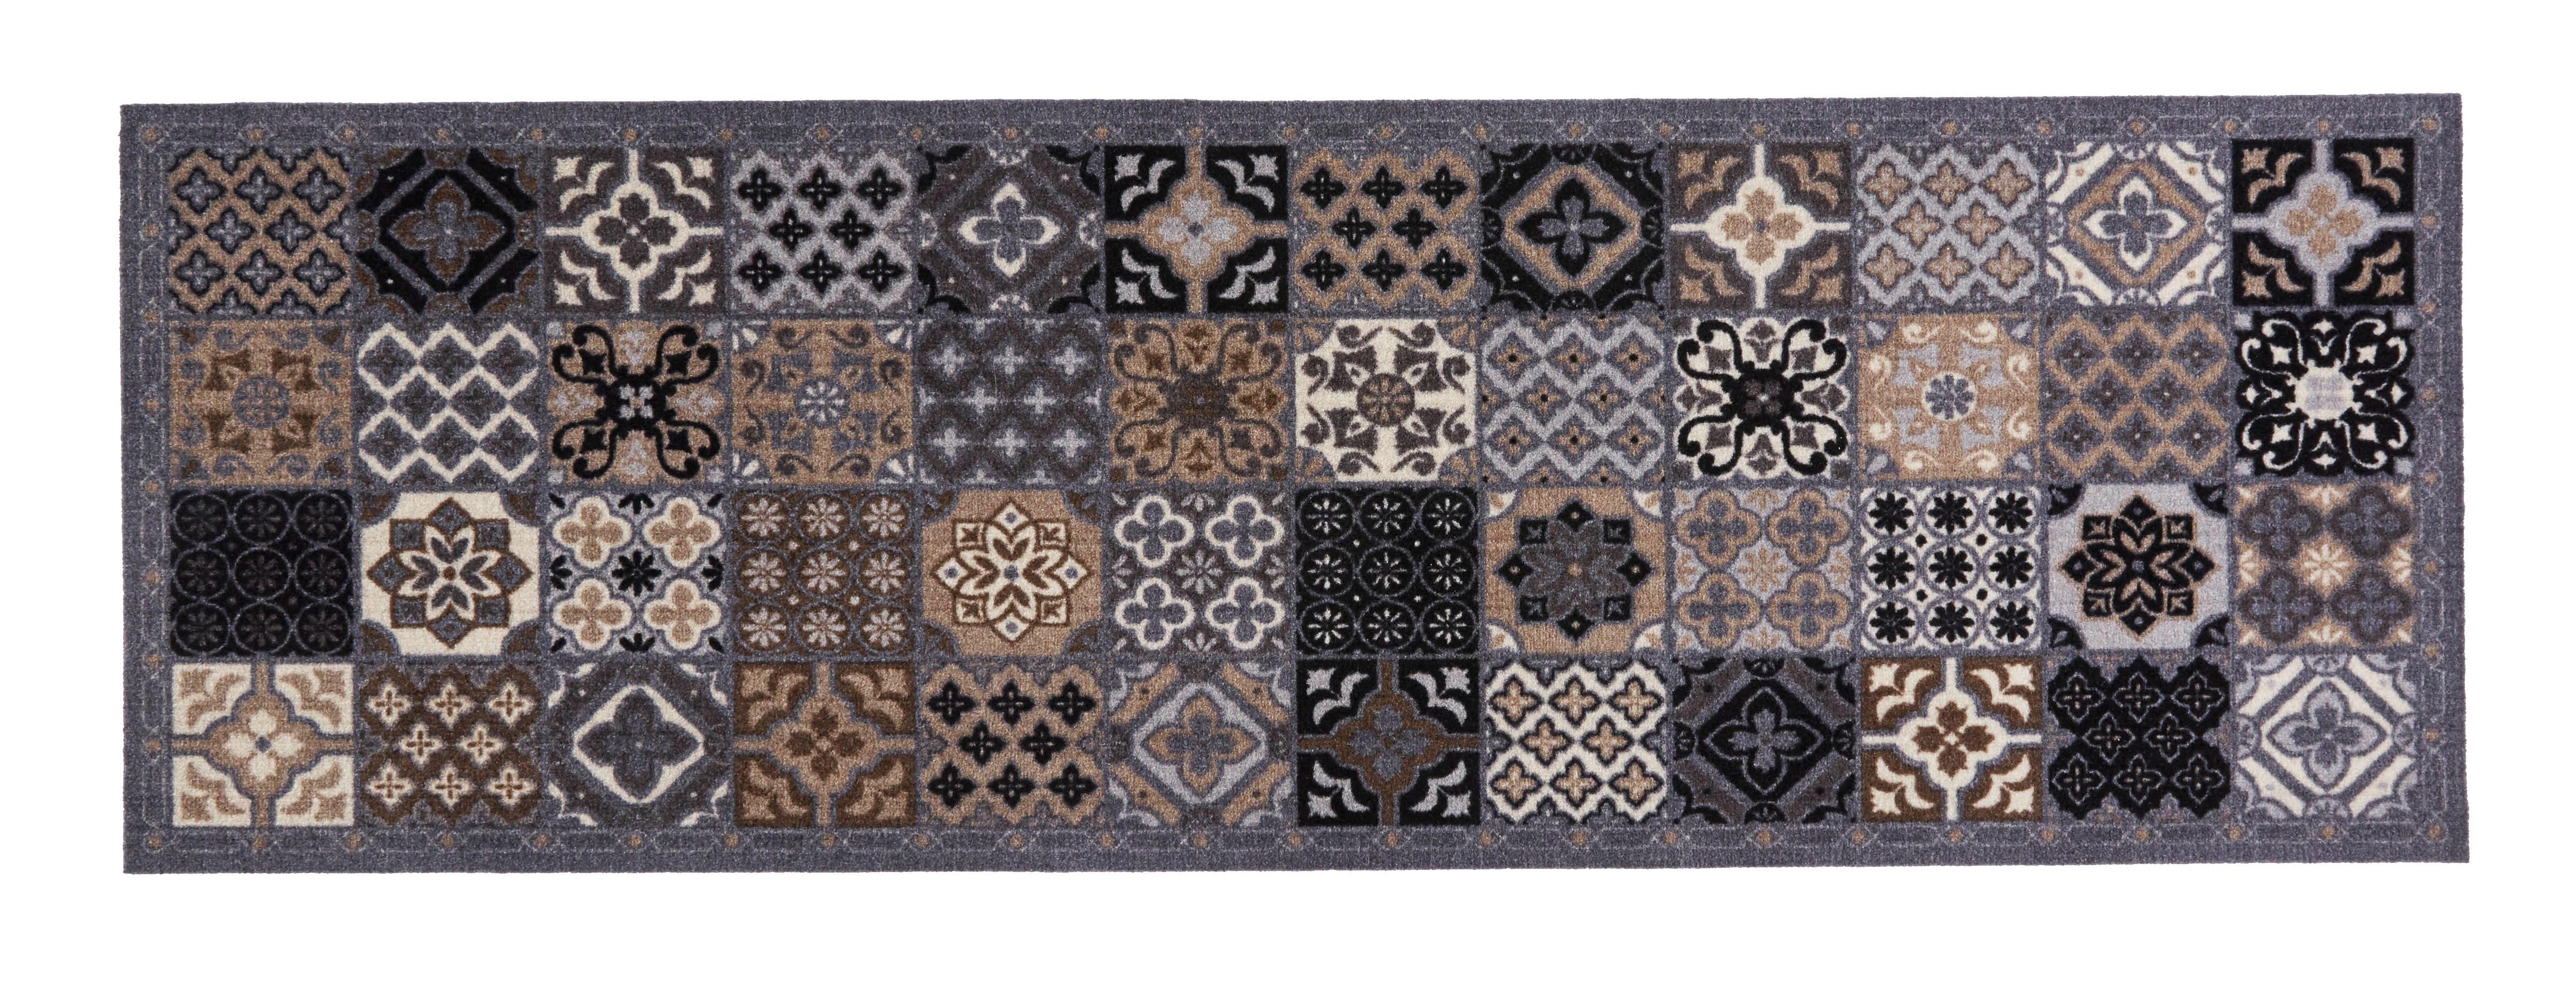 Fußmatte Dilara ca. 50x150cm - Beige/Grau, MODERN, Textil (50/150cm) - Modern Living